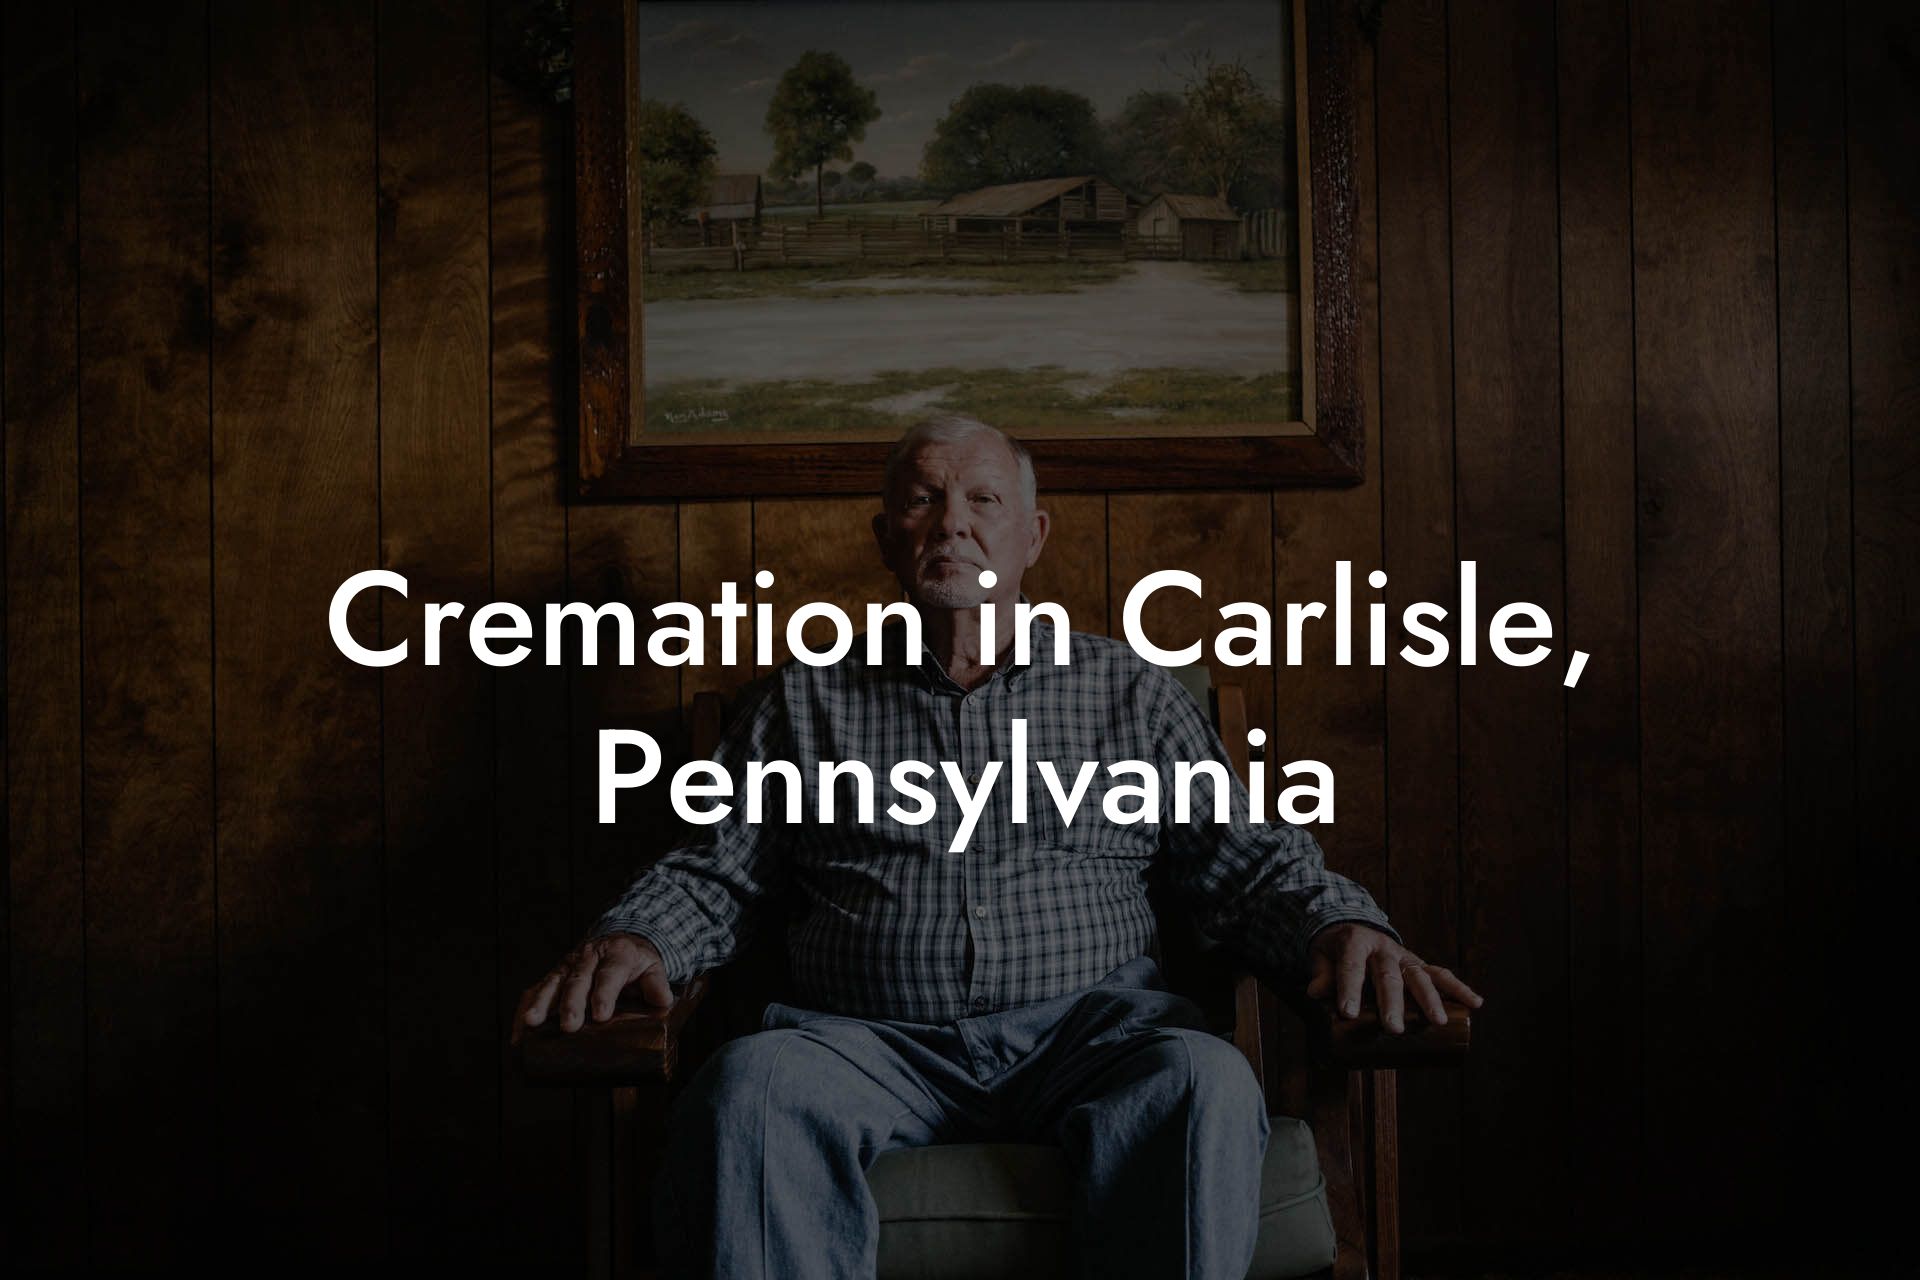 Cremation in Carlisle, Pennsylvania